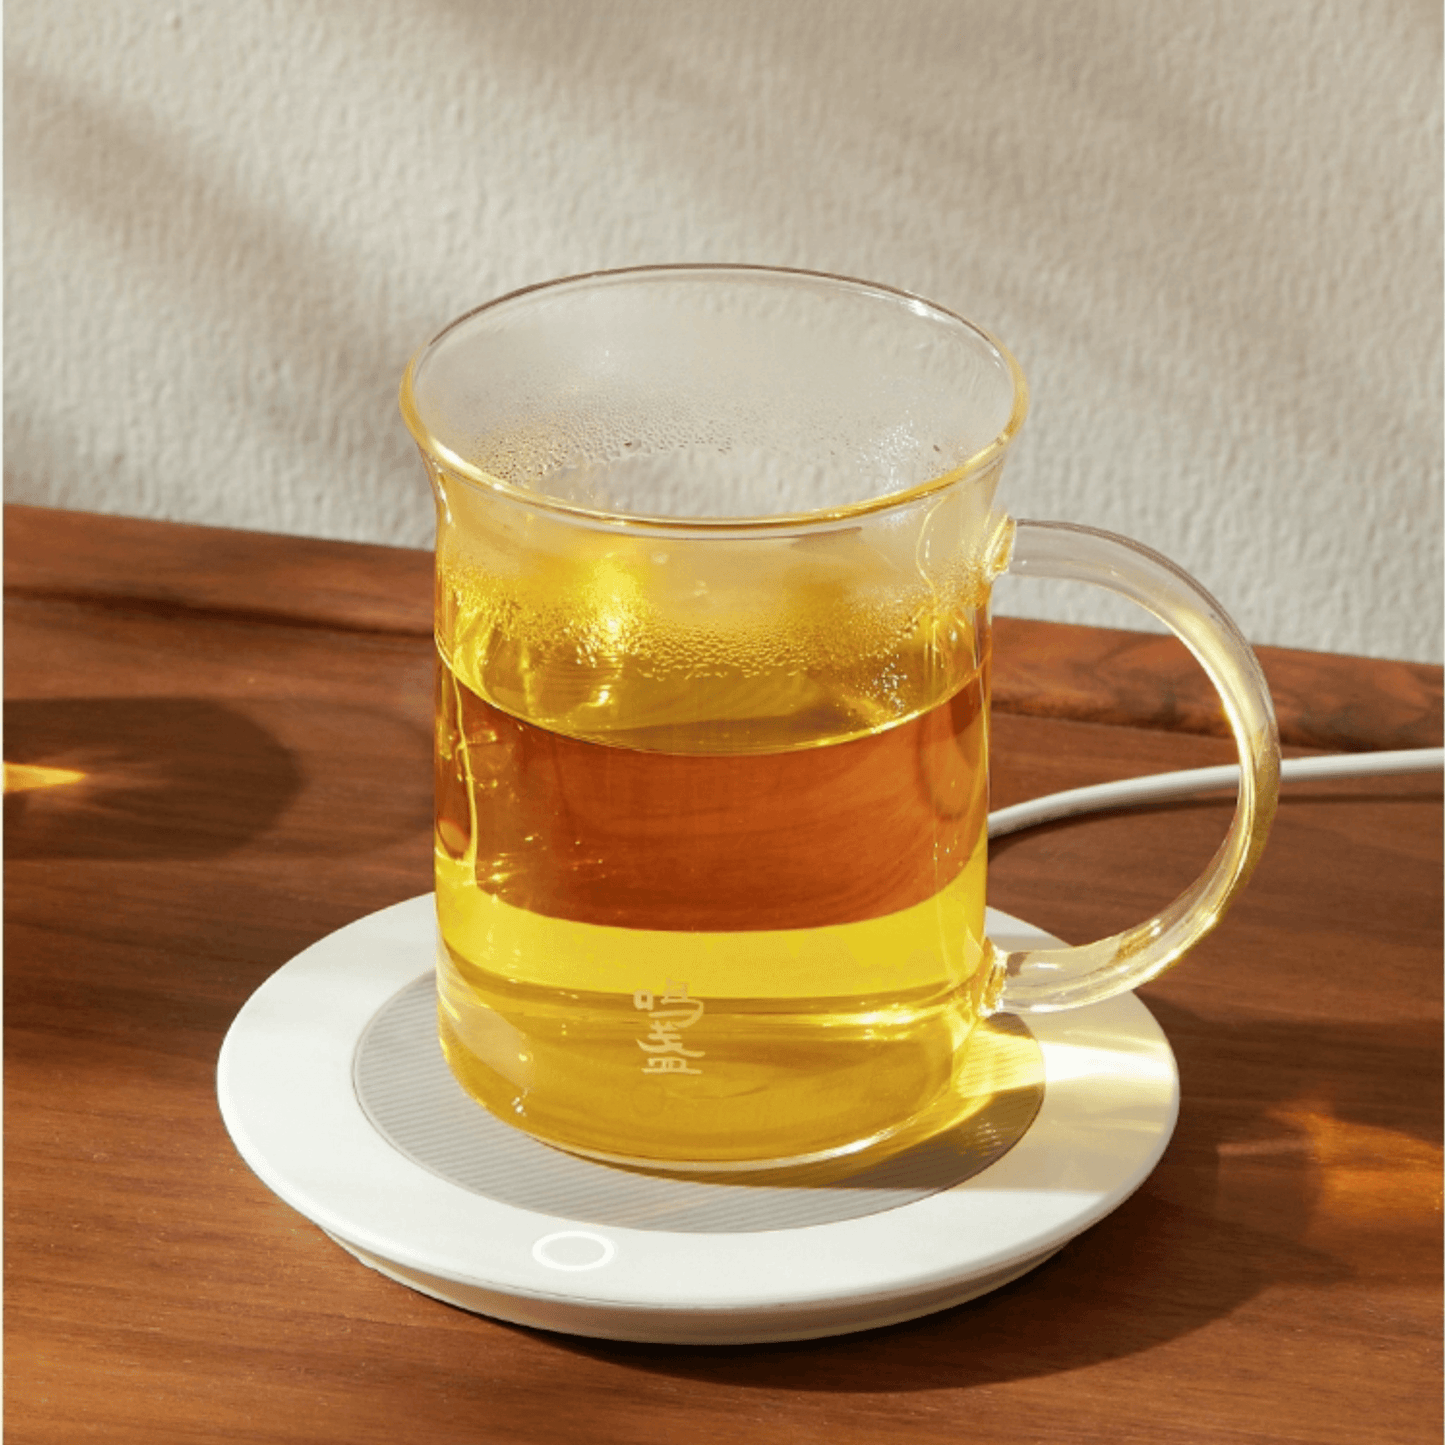 MINGZHAN Mug Warmer Milk Coffee Tea Warmer of 55-Degree for Desk